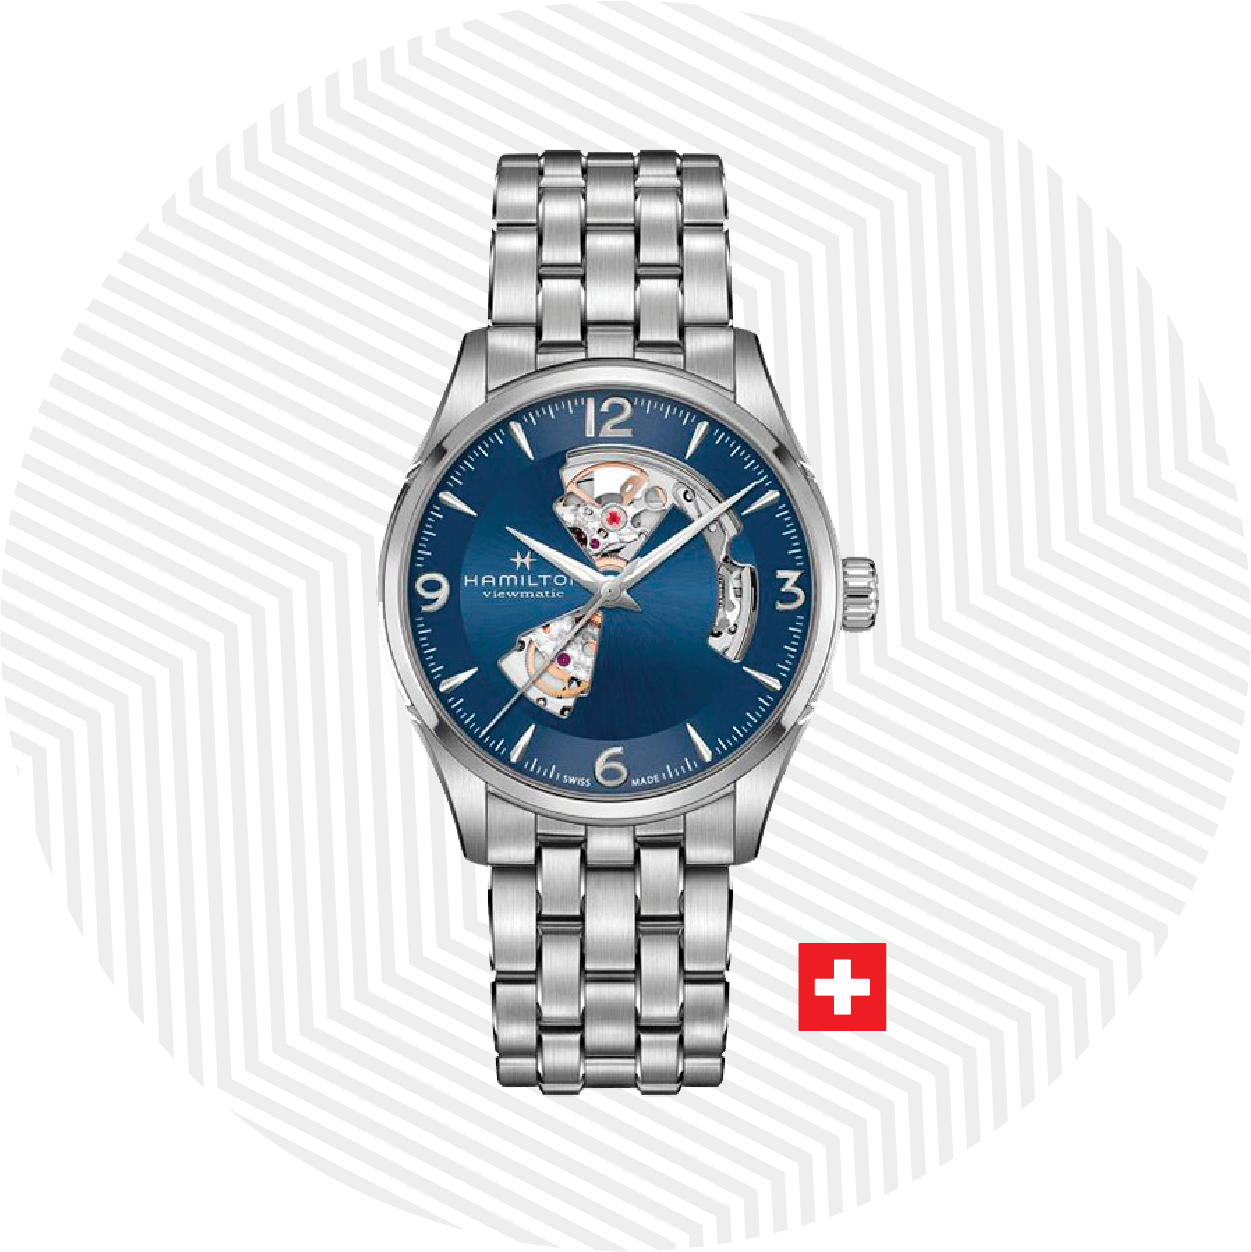 Swiss Watches